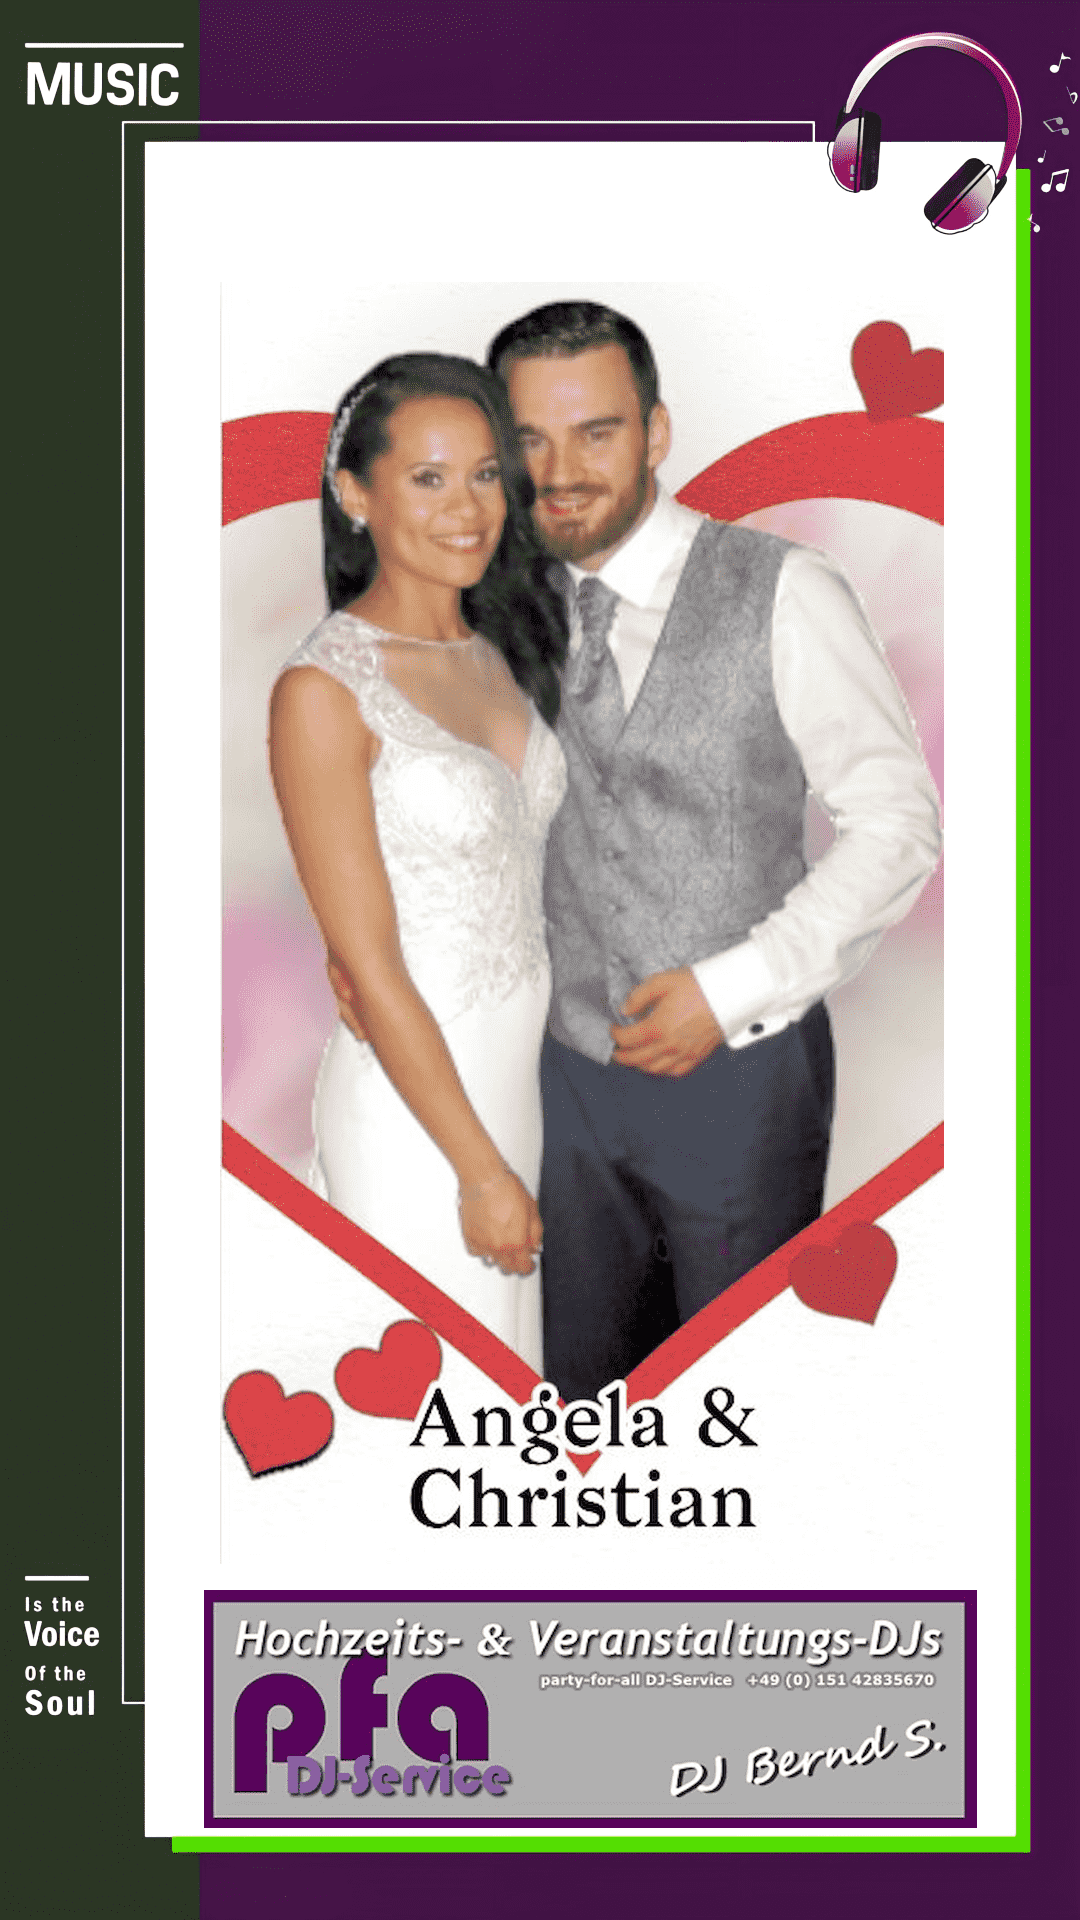 Angela & Christian